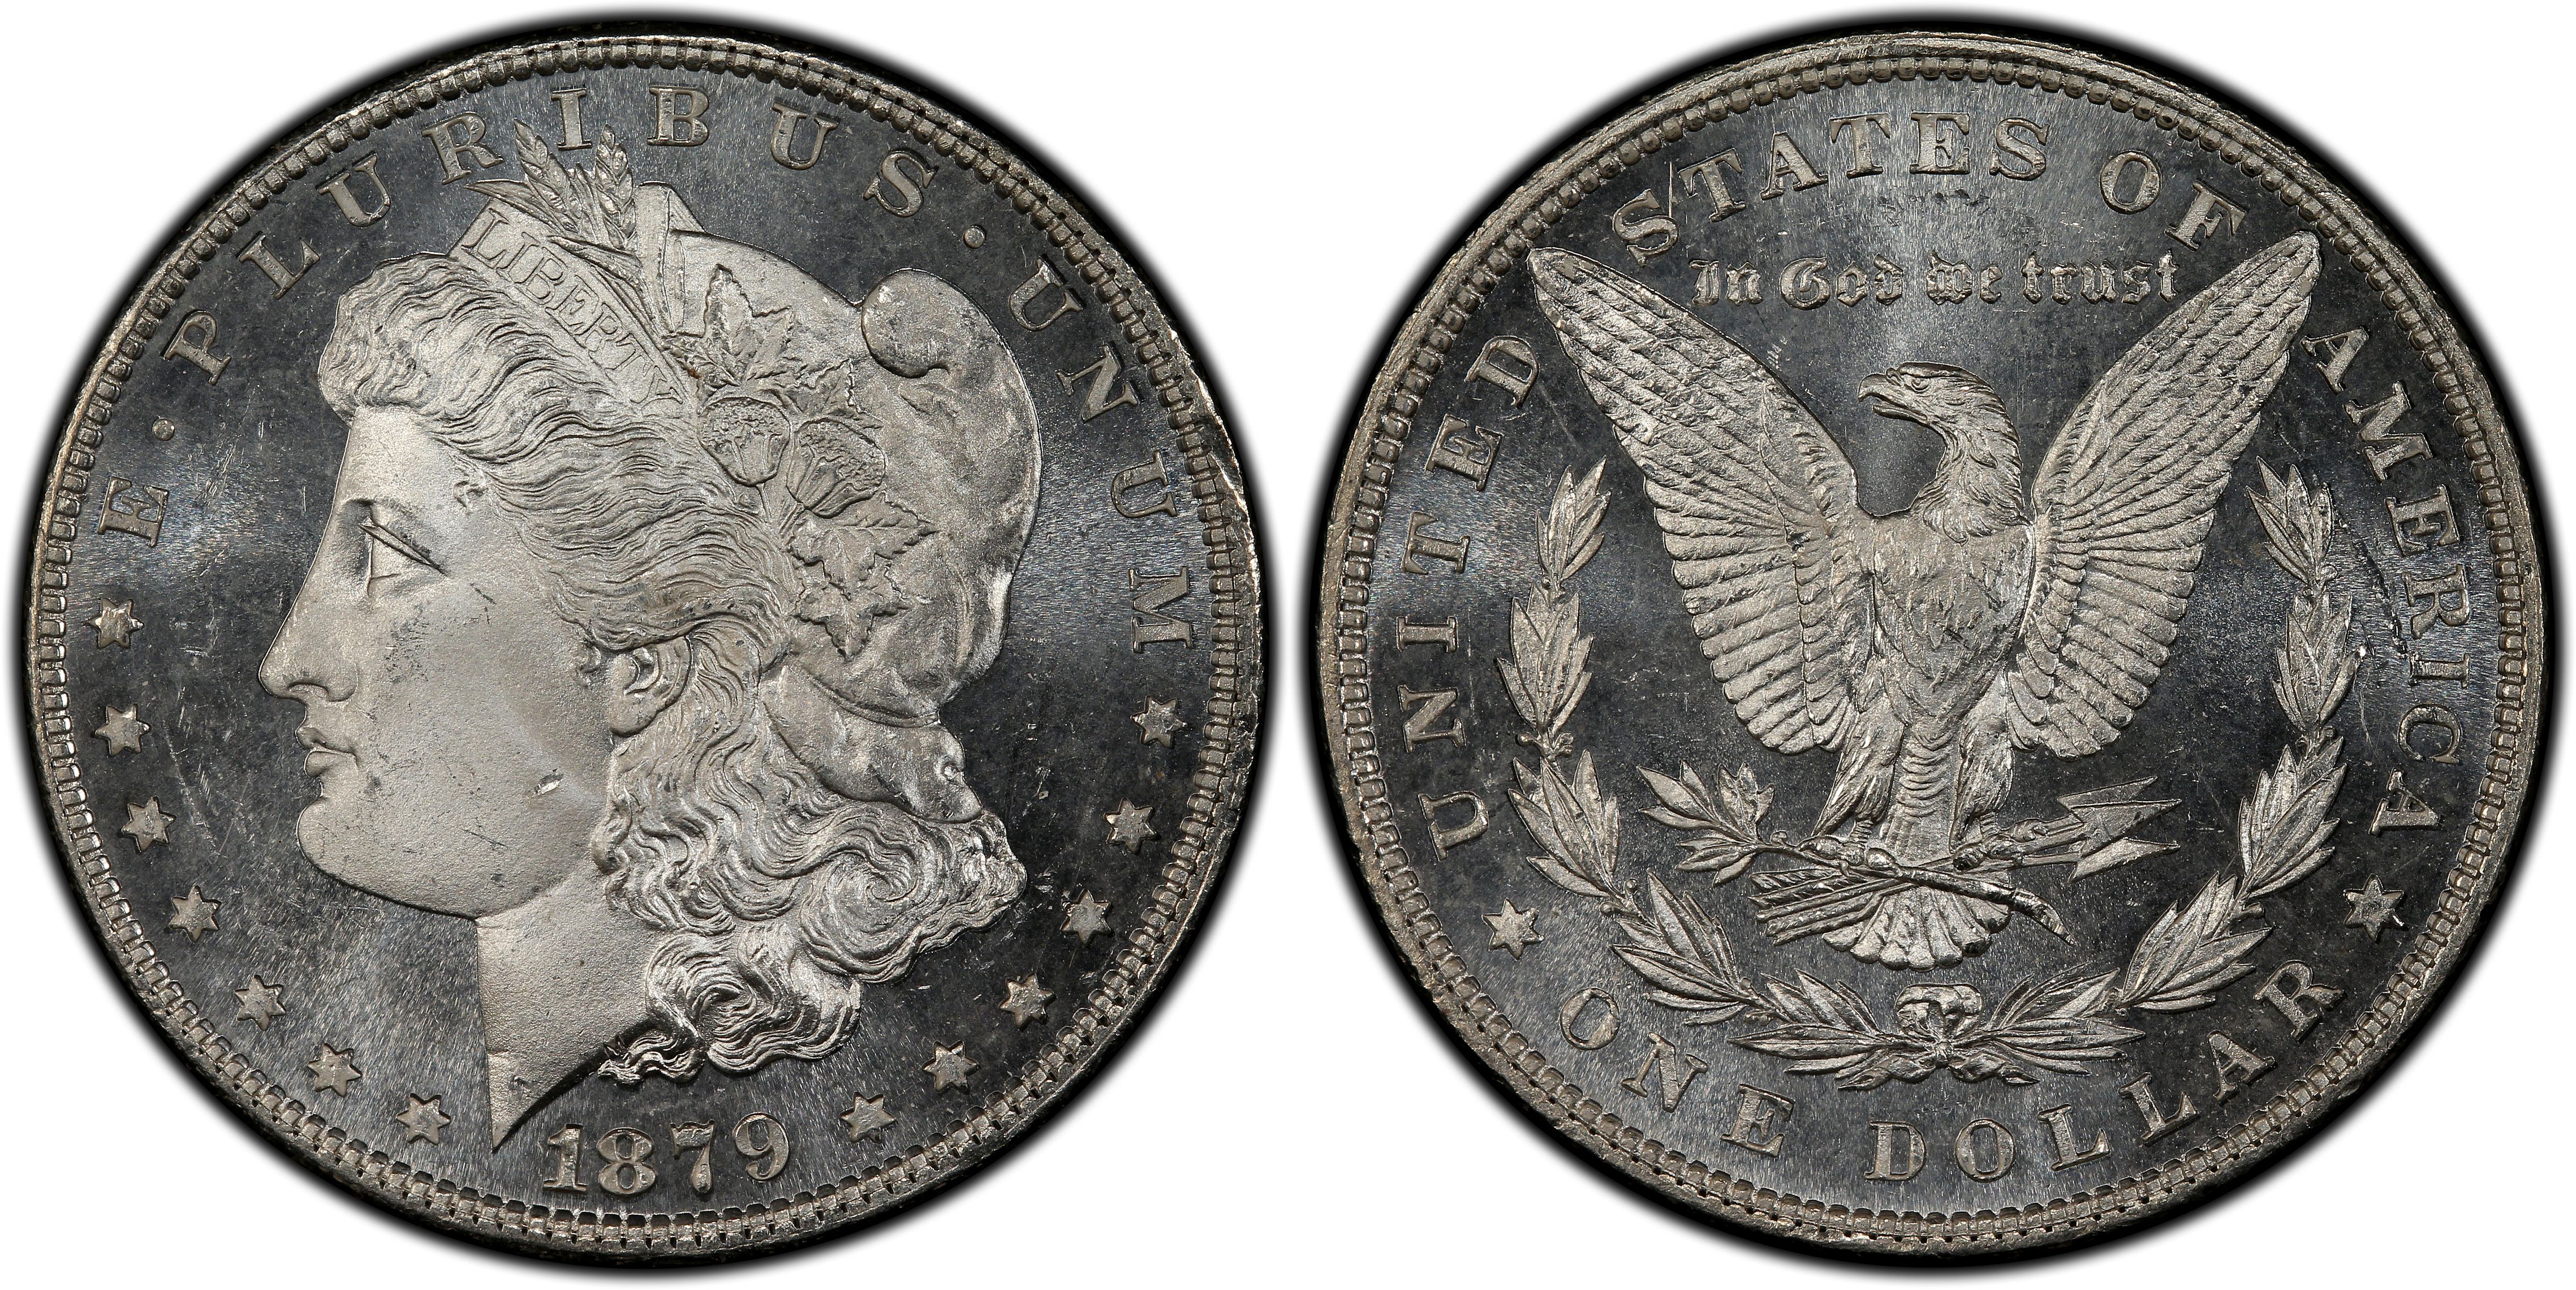 1879 $1, PL (Regular Strike) Morgan Dollar - PCGS CoinFacts